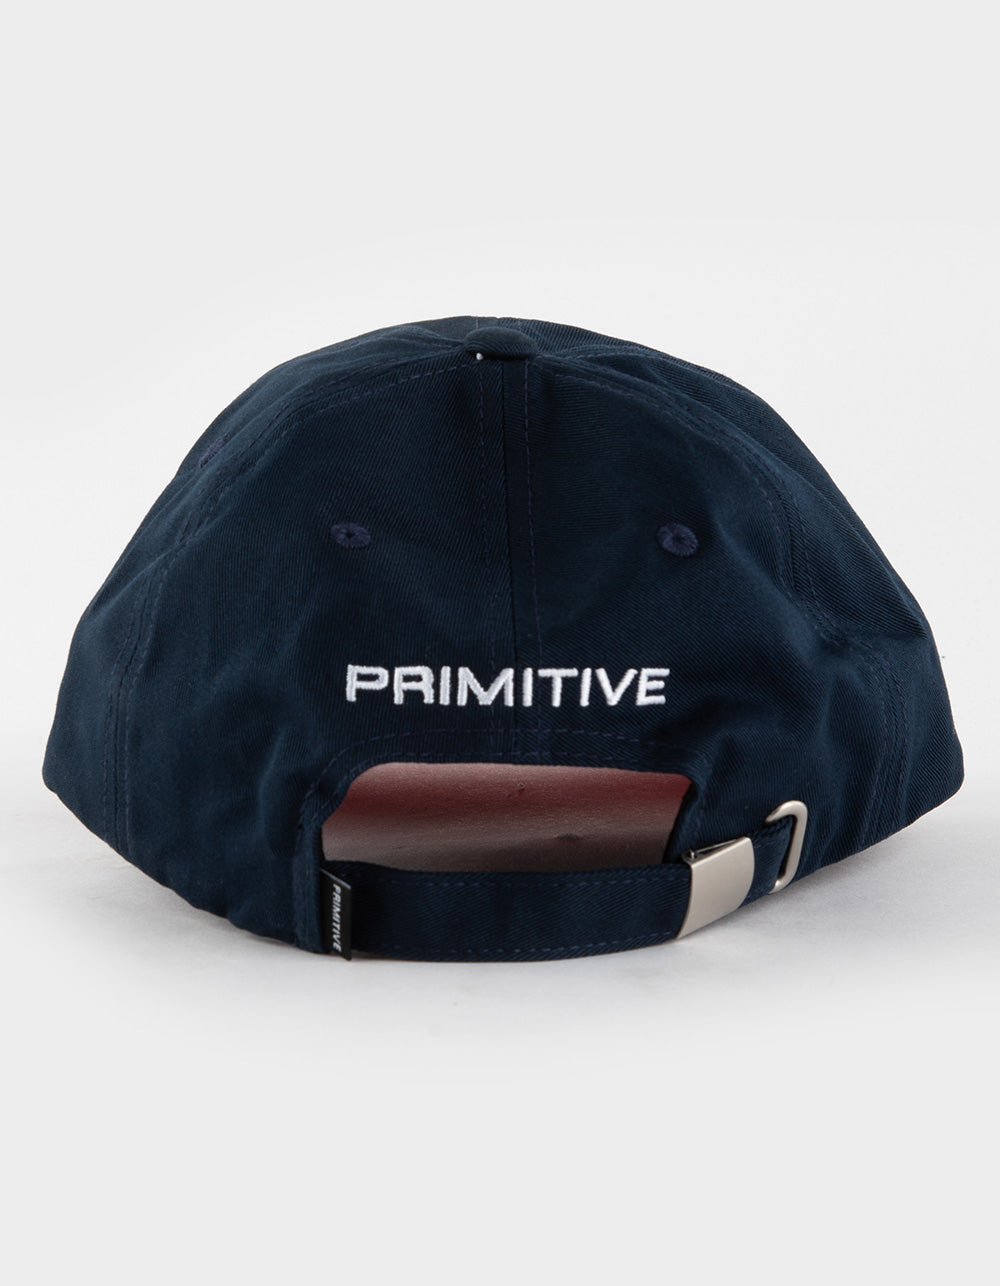 Primitive Crest Snapback Navy/Red